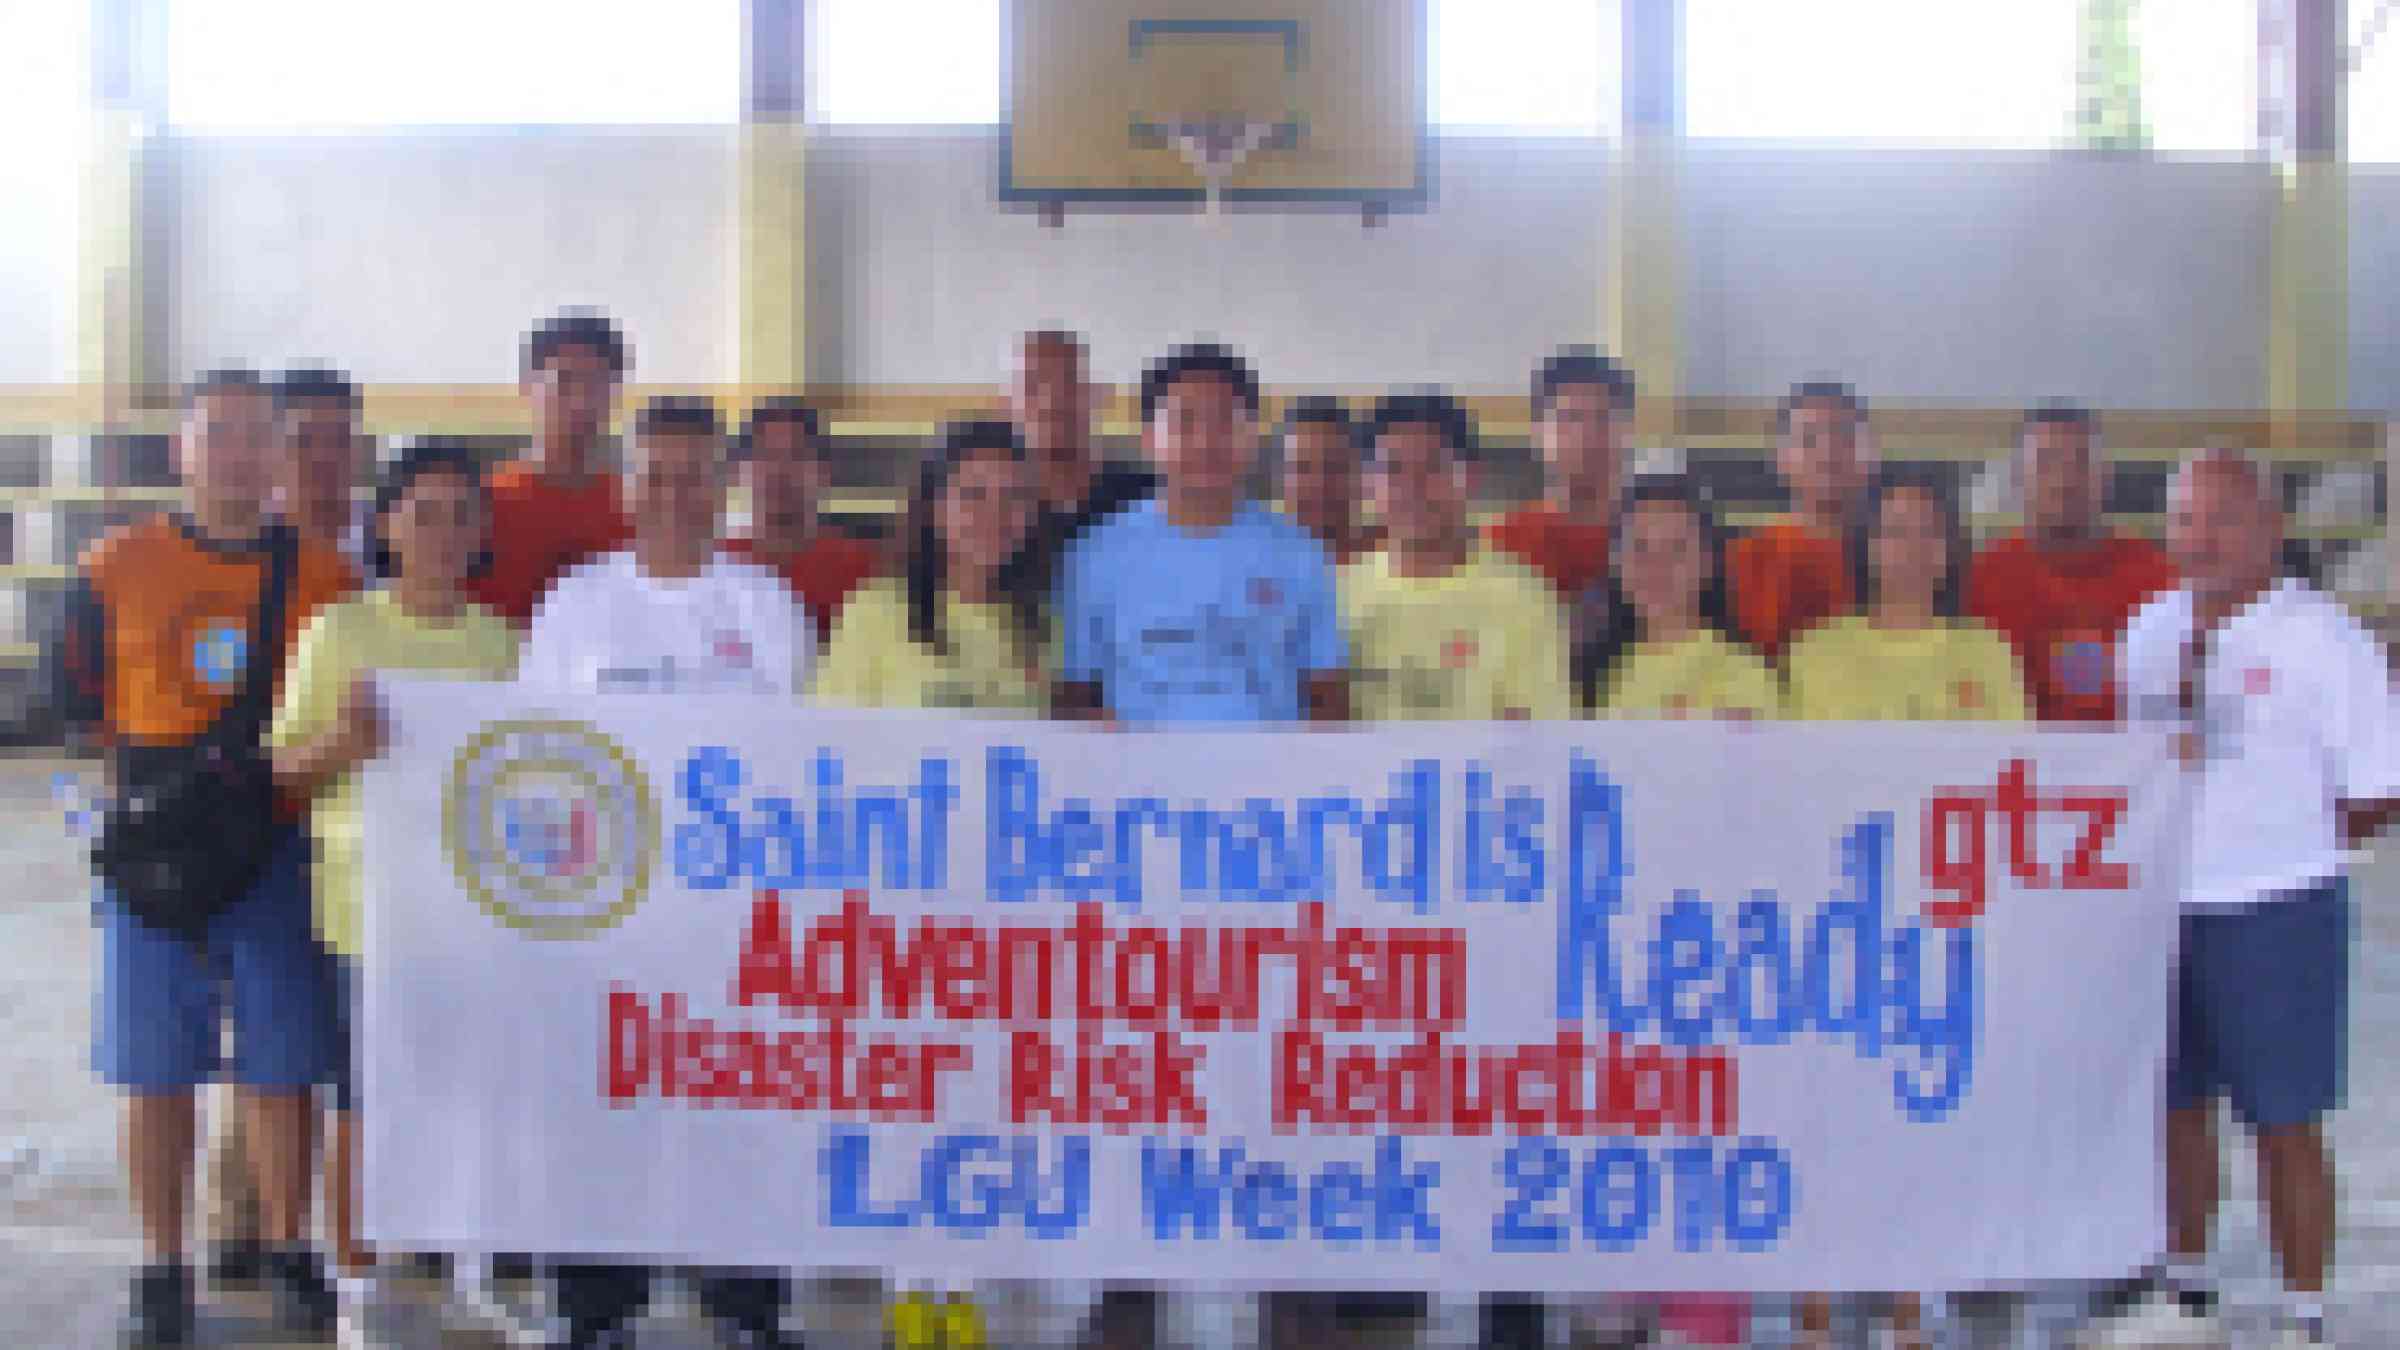 Saint Bernard is ready: Adventourism - Disaster Risk Reduction - LGU week 2010